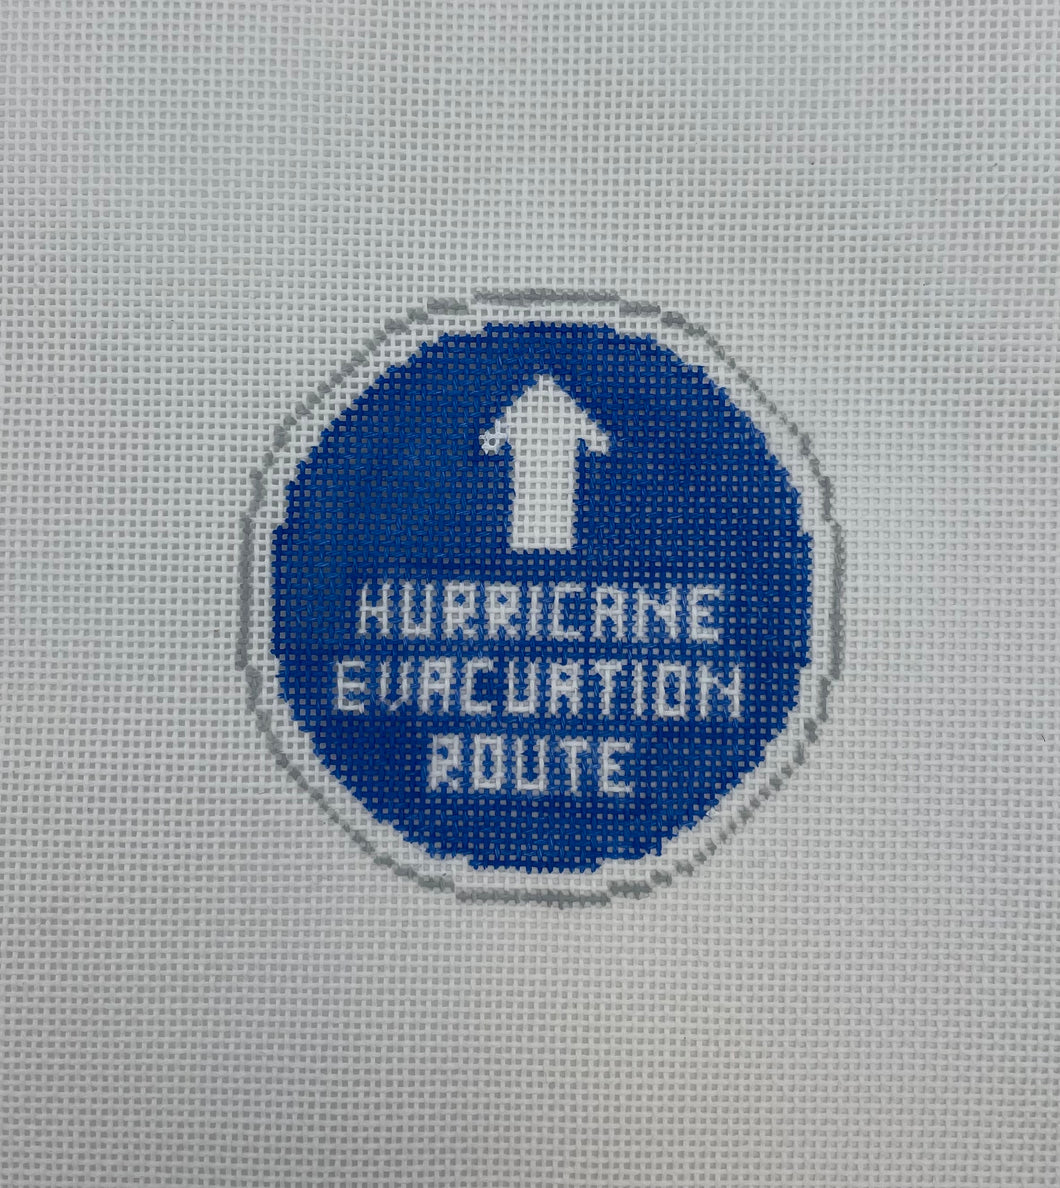 Hurricane Evacuation Route Needlepoint Ornament